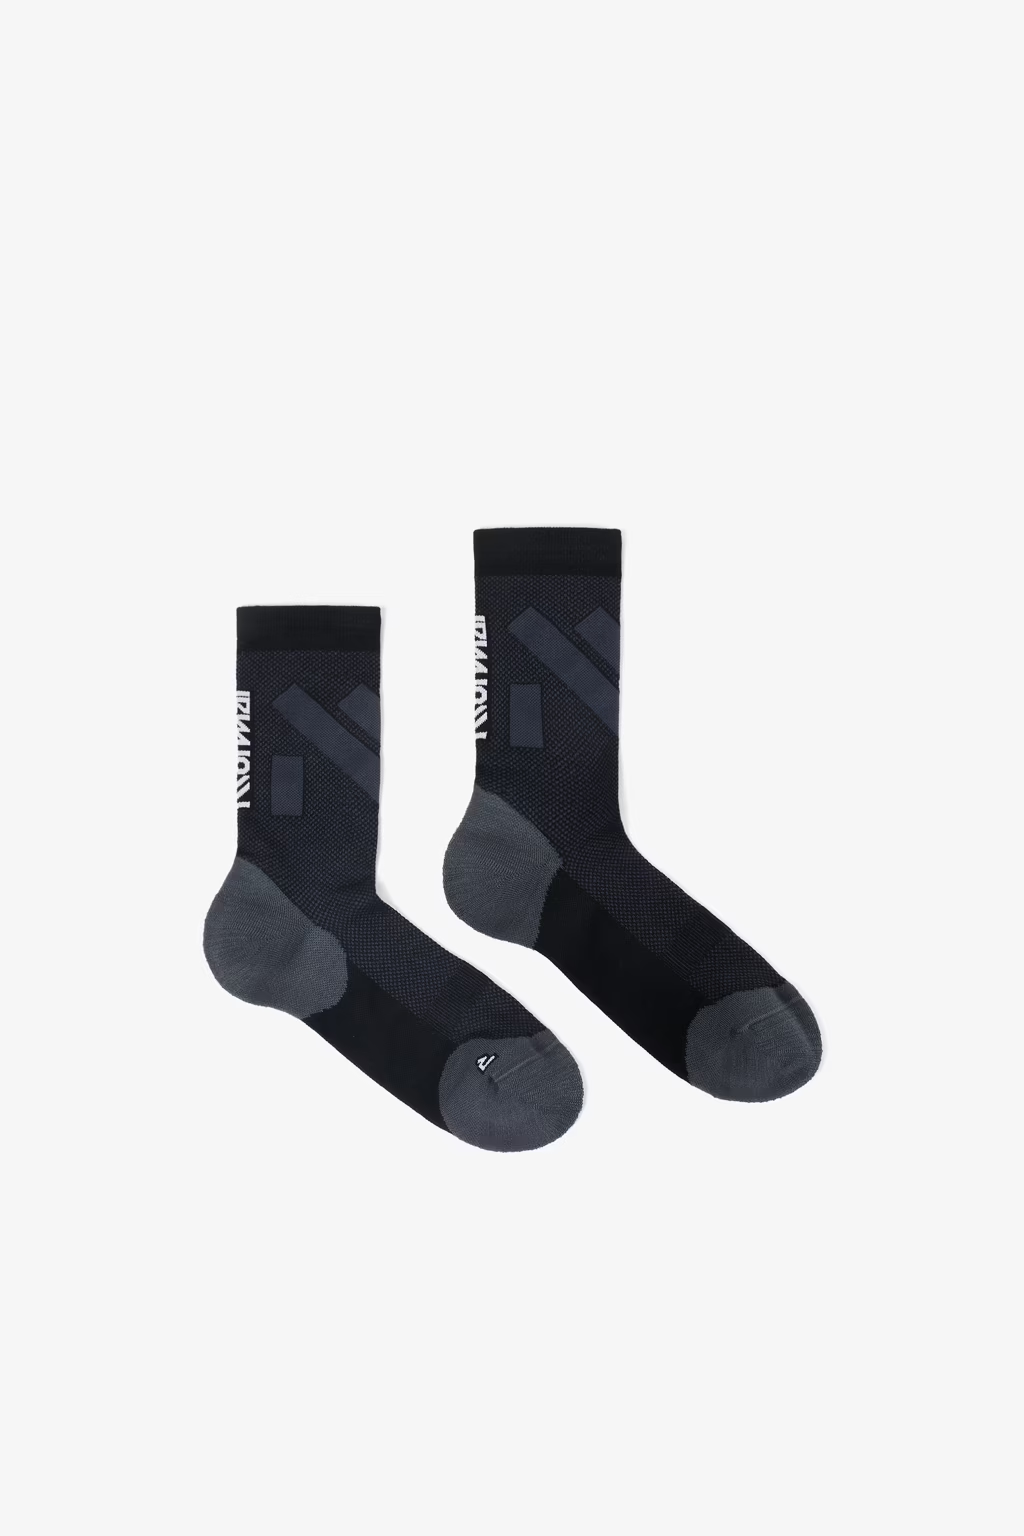 NNormal Race Socks (Mid-Cut)